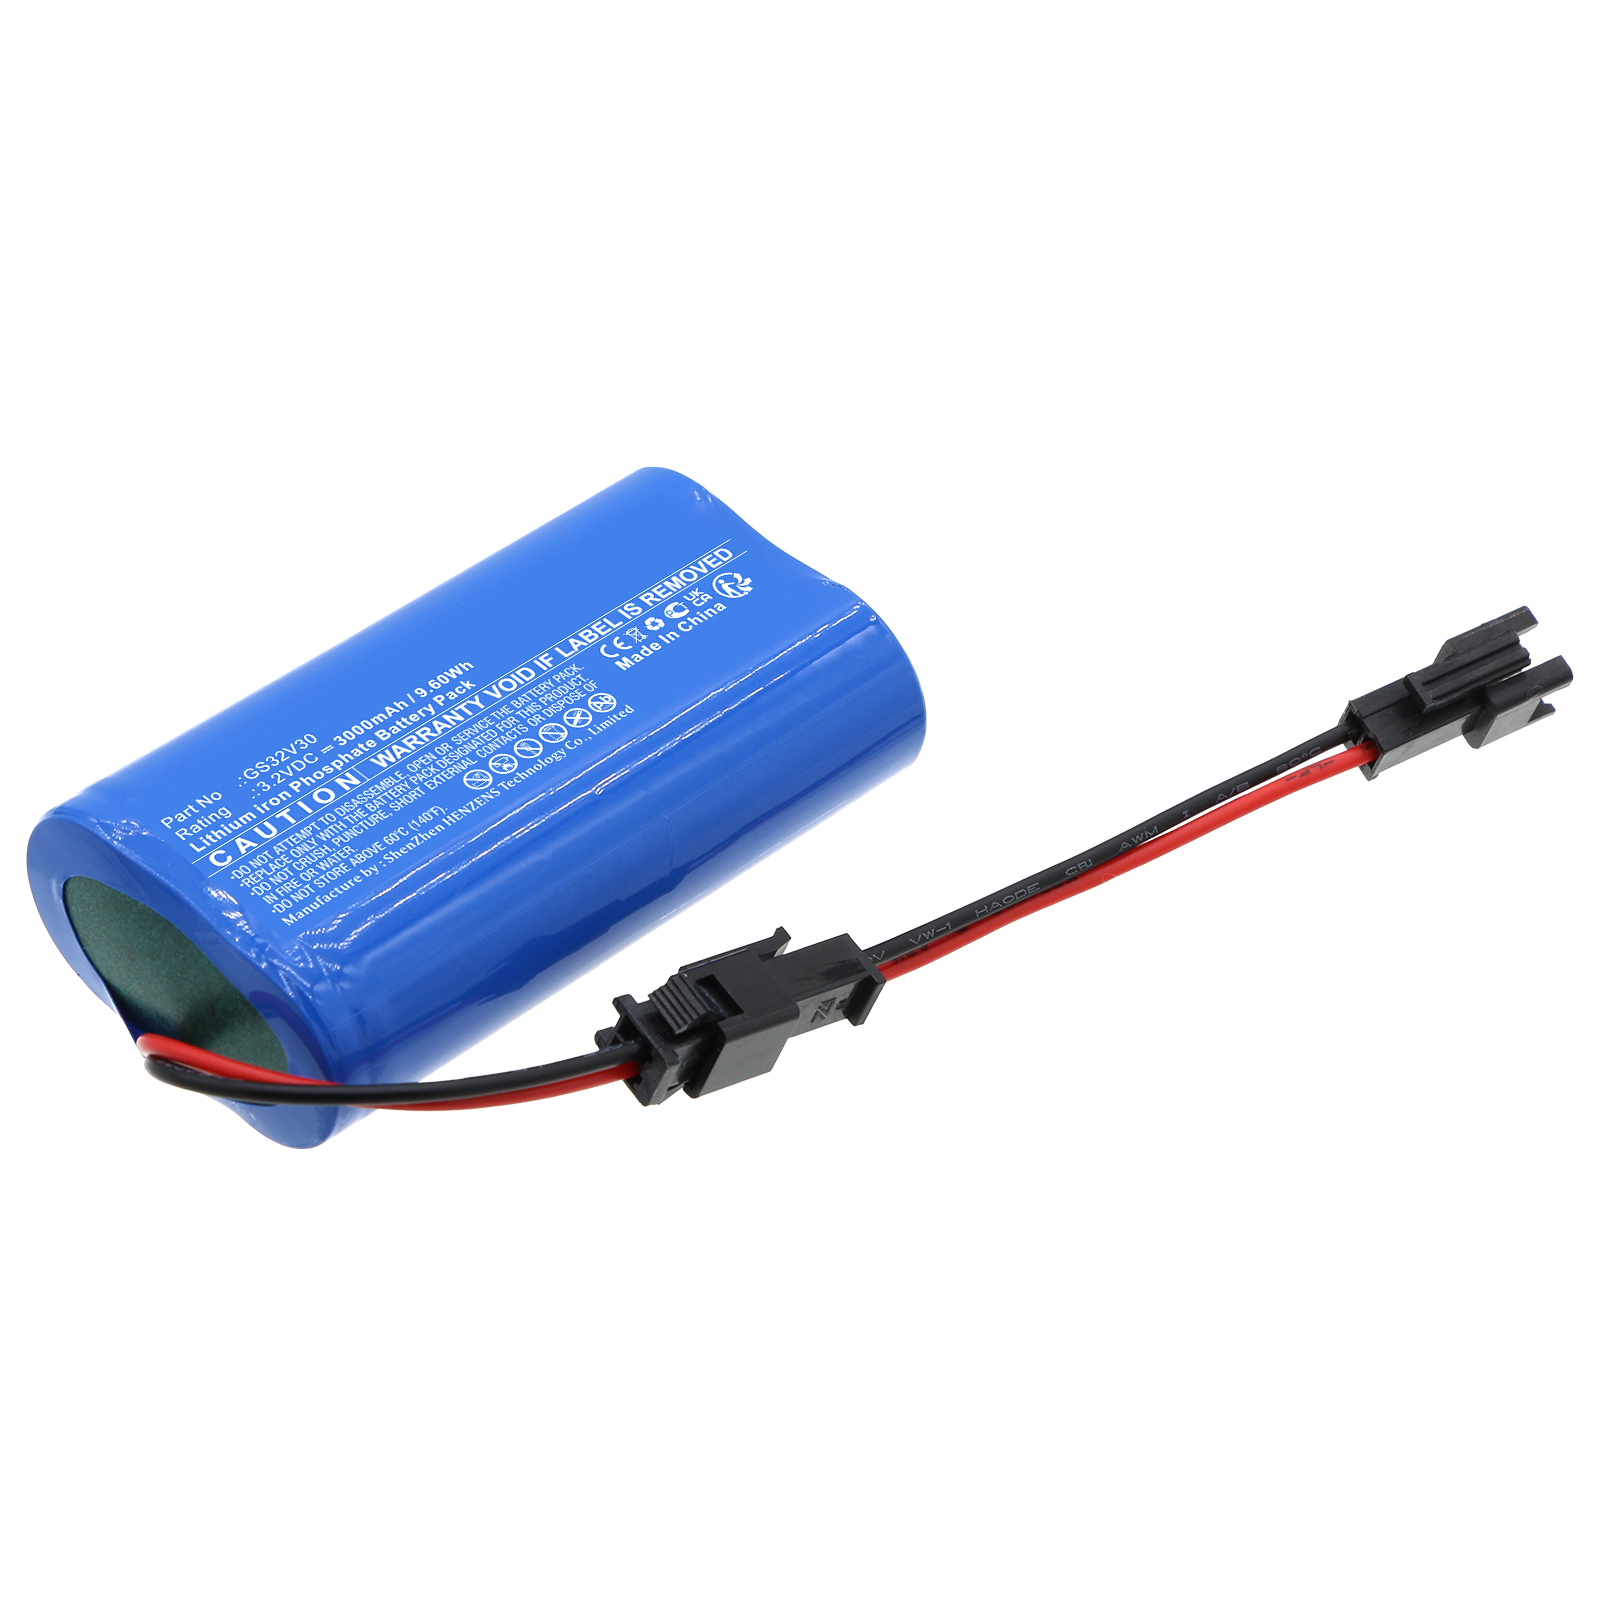 Synergy Digital Solar Battery, Compatible with Gama Sonic GS32V30 Solar Battery (LiFePO4, 3.2V, 3000mAh)